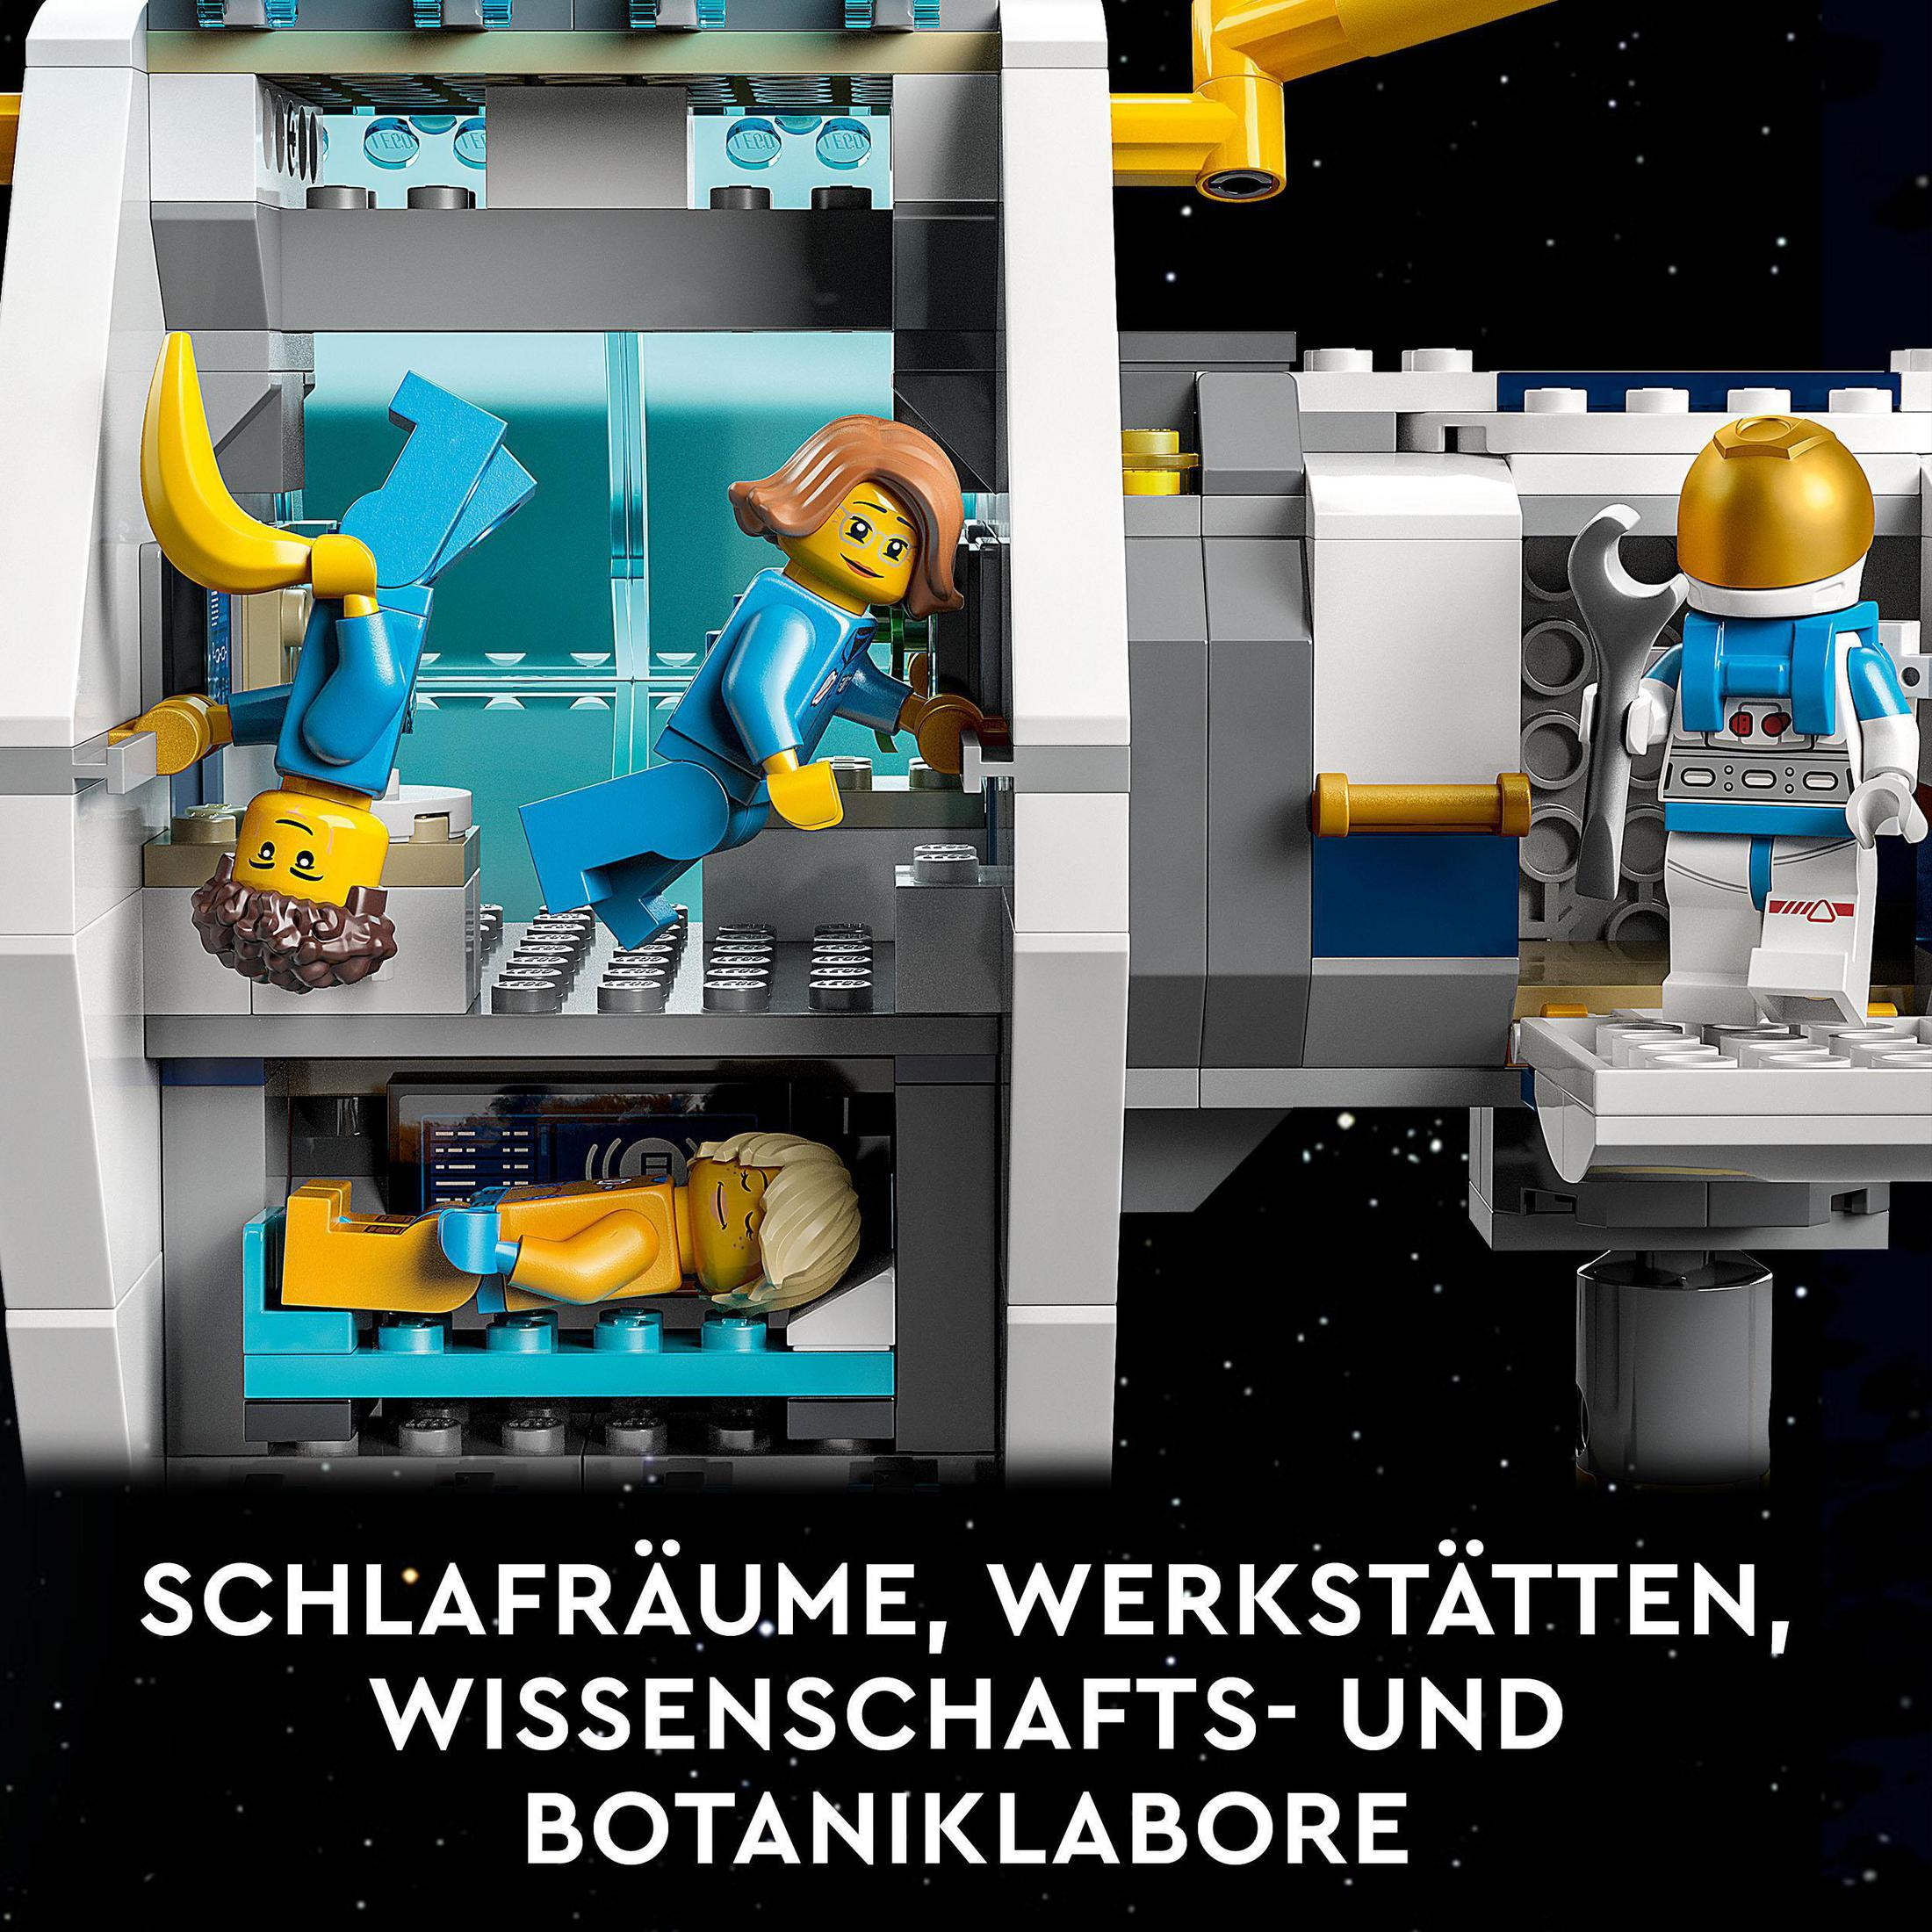 Mehrfarbig 60349 MOND-RAUMSTATION Bausatz, LEGO